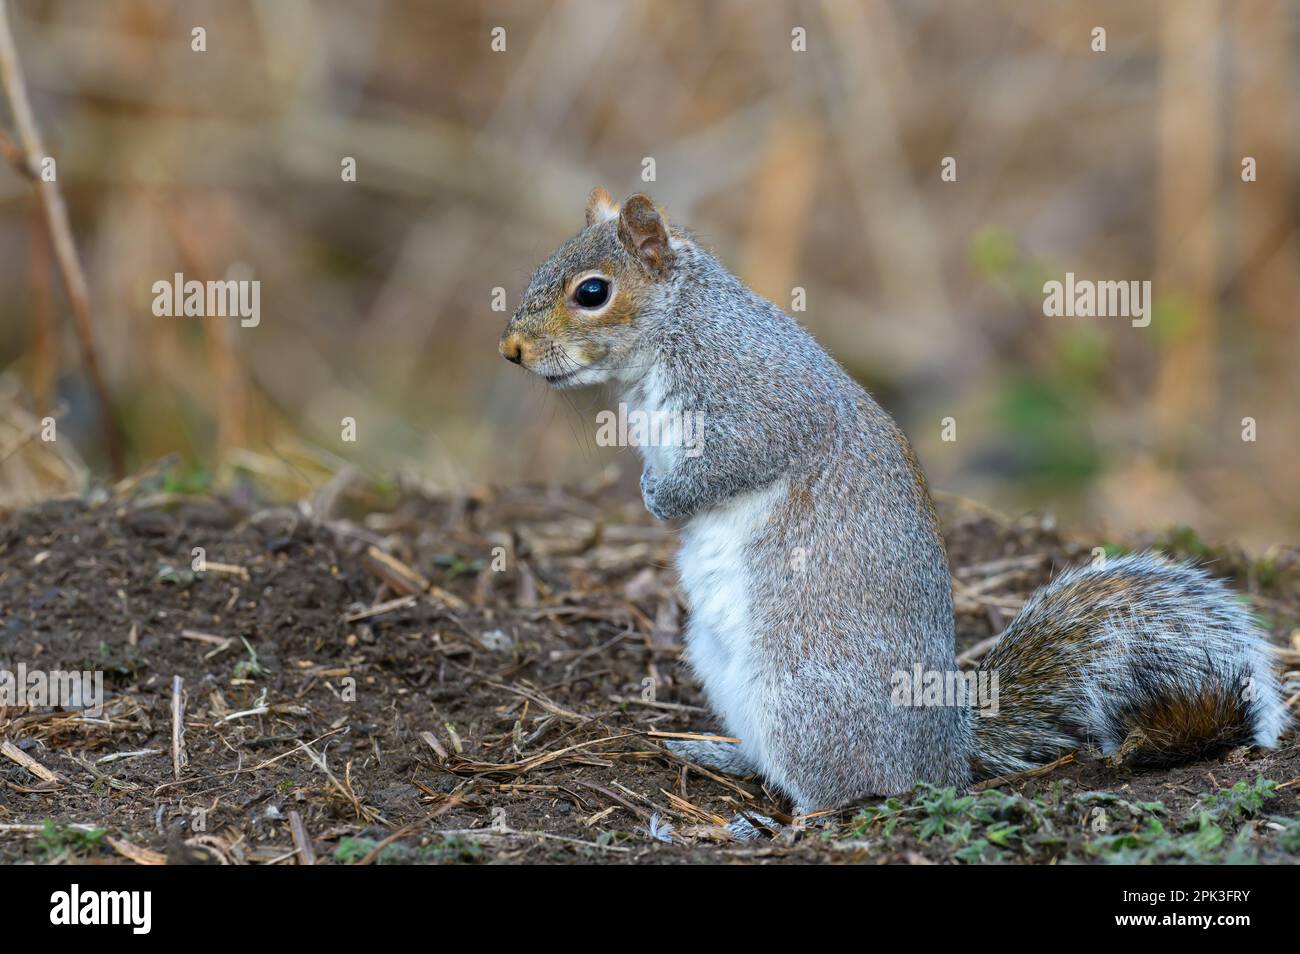 Grey squirrel, Sciurus carolinensis, standing upright. Looking left Stock Photo